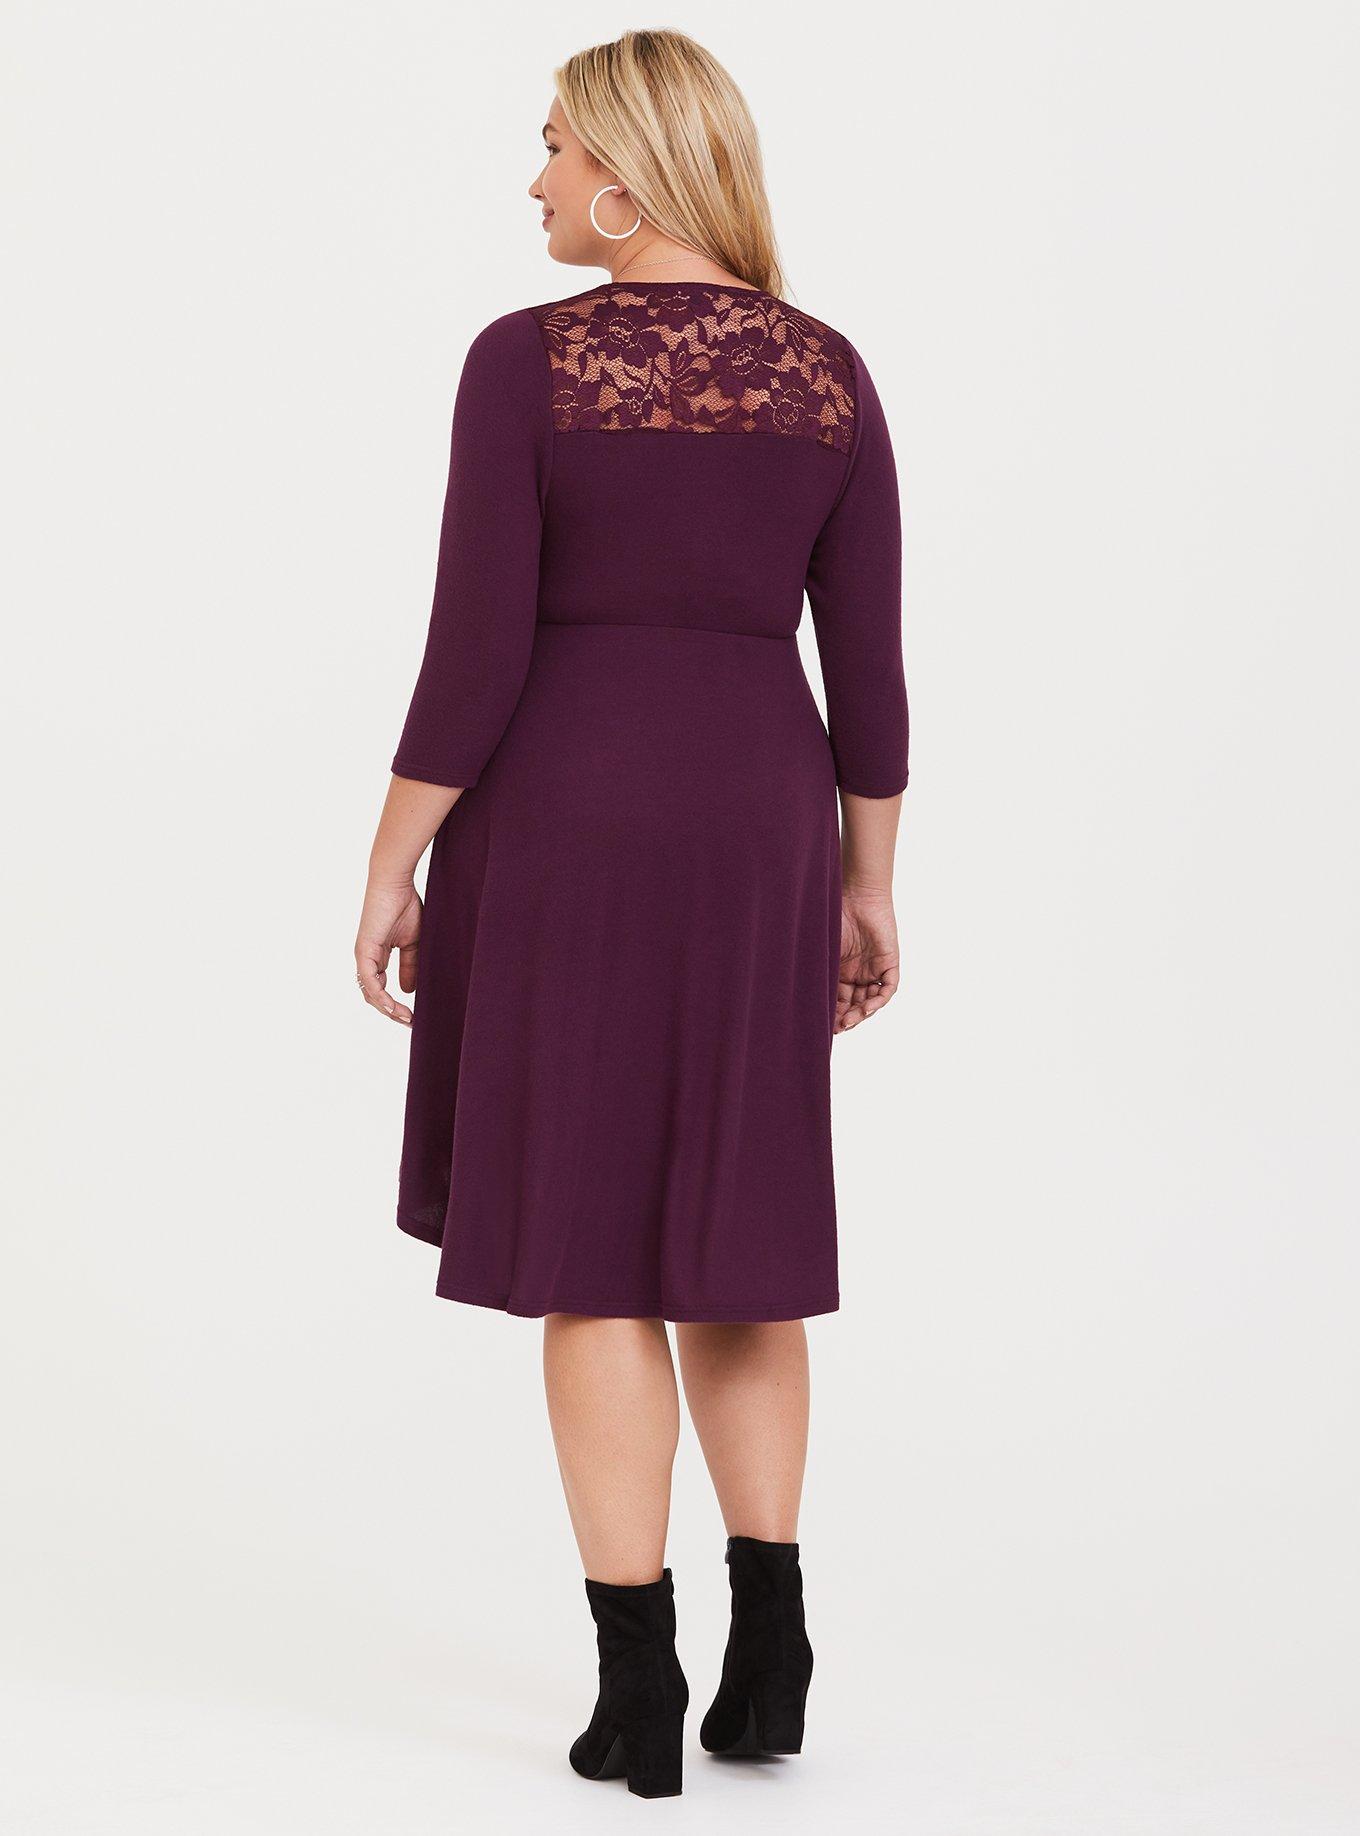 Plus Size - Purple 3/4 Sleeve Wrap Dress - Torrid